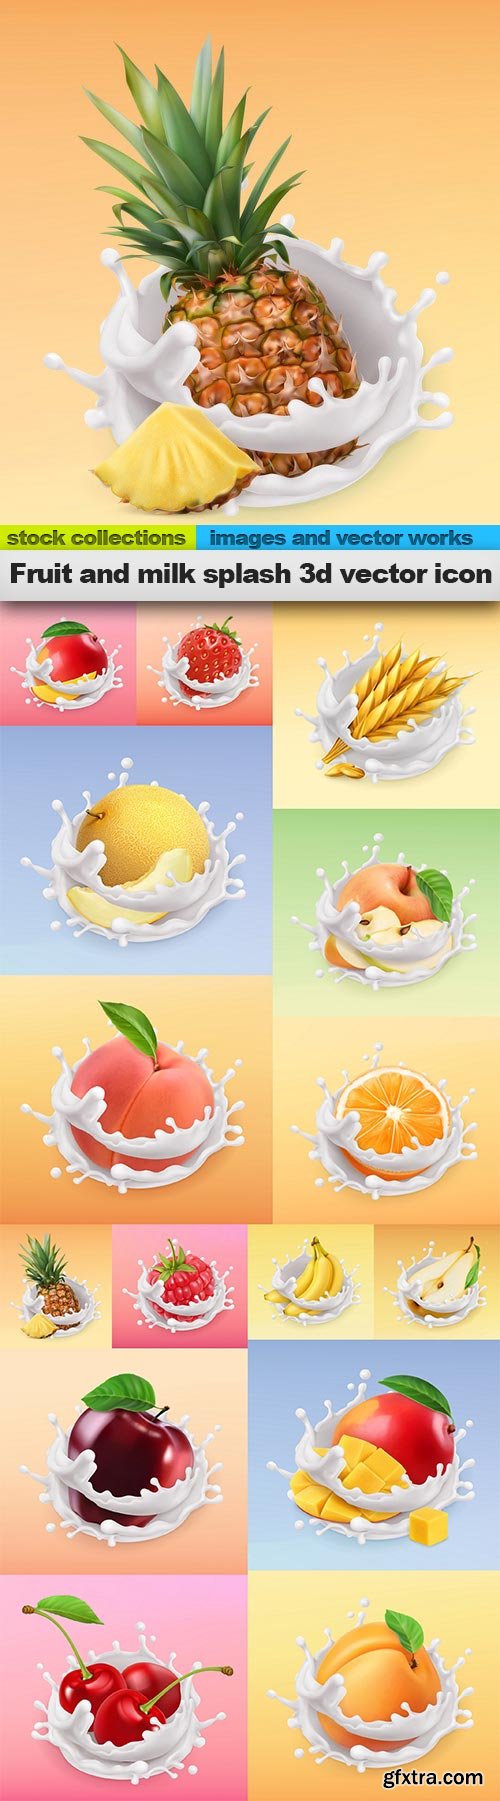 Fruit and milk splash 3d vector icon, 15 x EPS